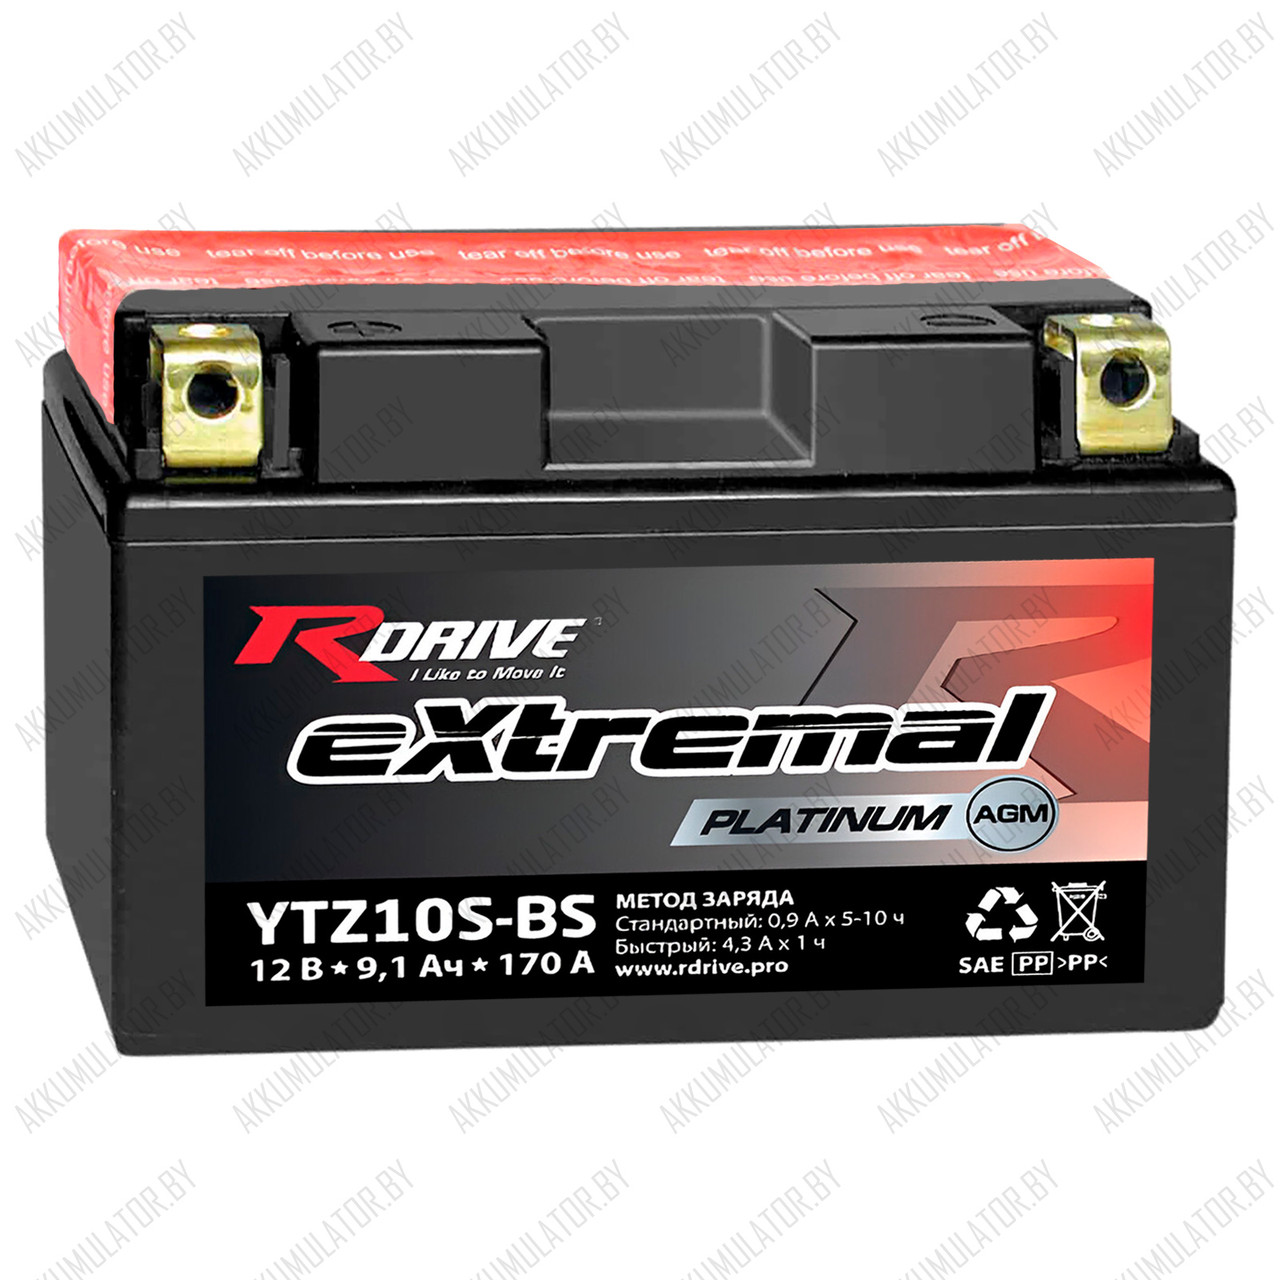 RDrive eXtremal Platinum YTZ10S-BS / 9,1Ah